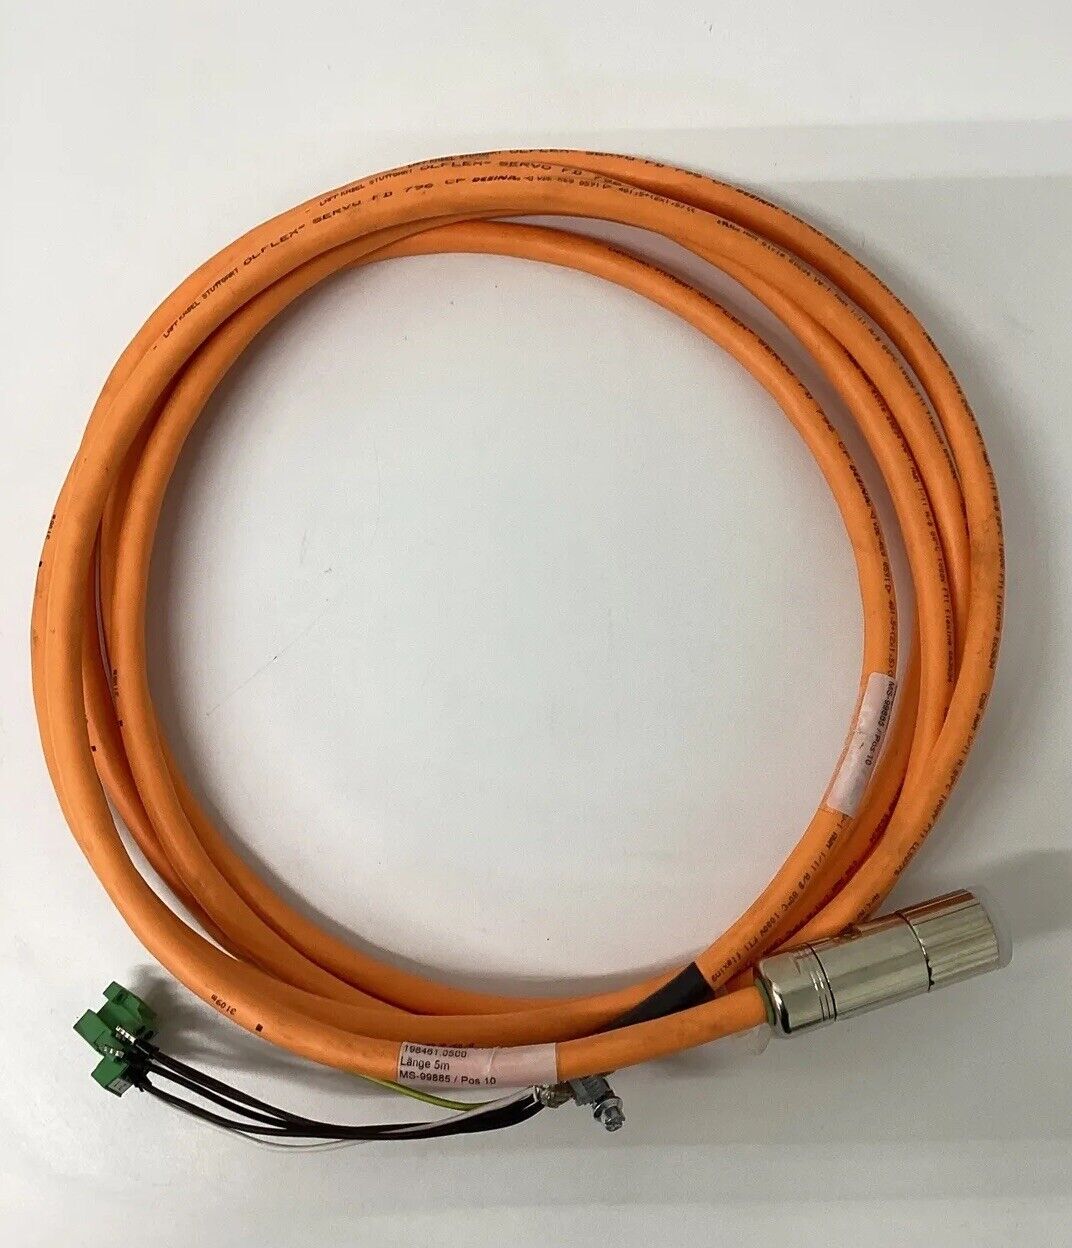 Lutze 198461.0500 / 6FX5002-5DA01-1AF0 Power Cable (CBL162)